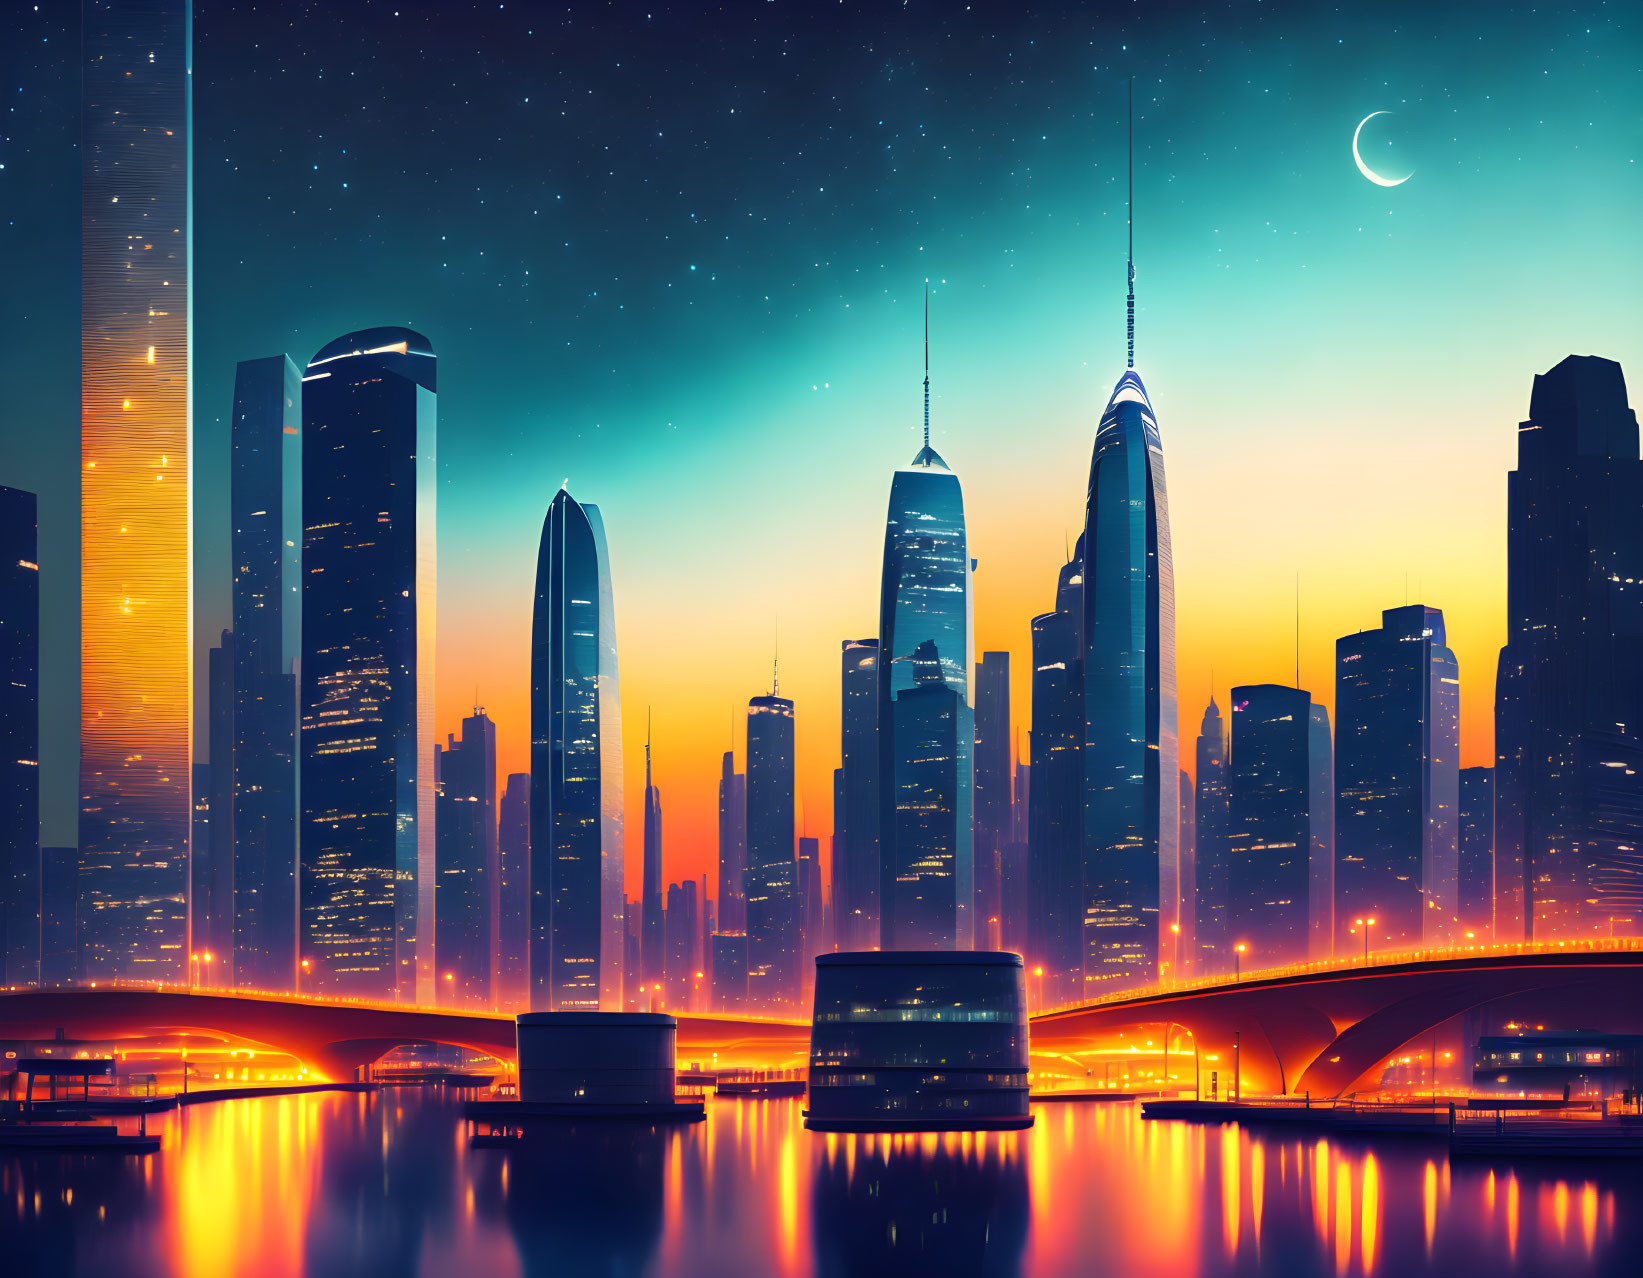 Futuristic city skyline at twilight with illuminated skyscrapers, bridges, and starry sky